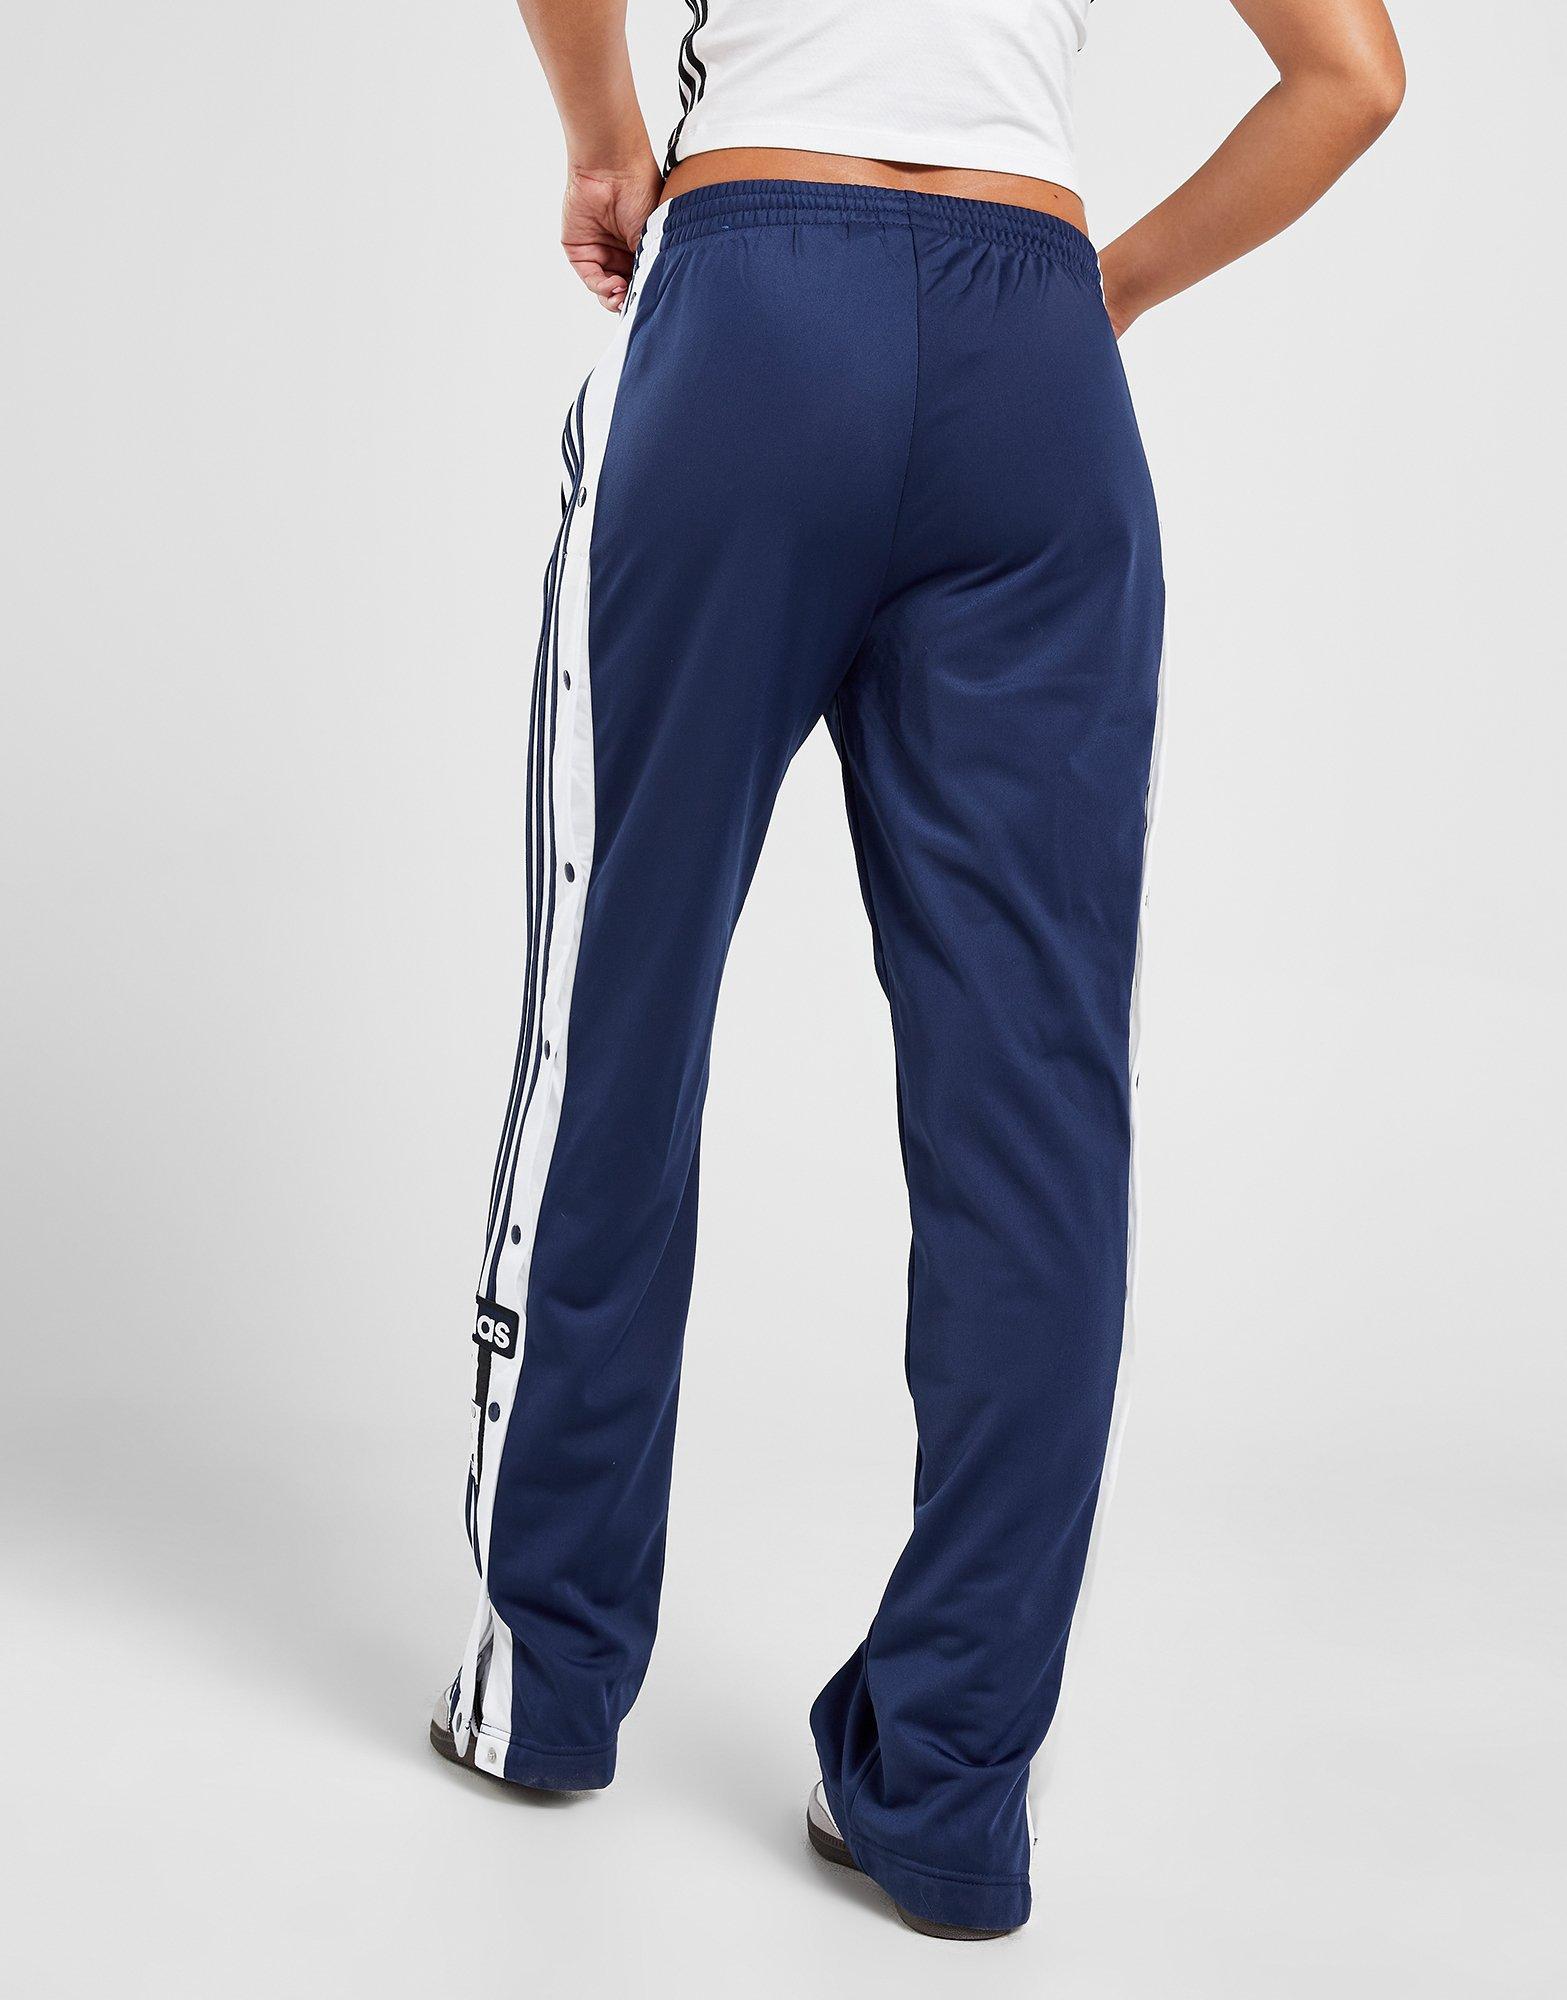 Blue adidas Originals Adibreak Track Pants | JD Sports UK